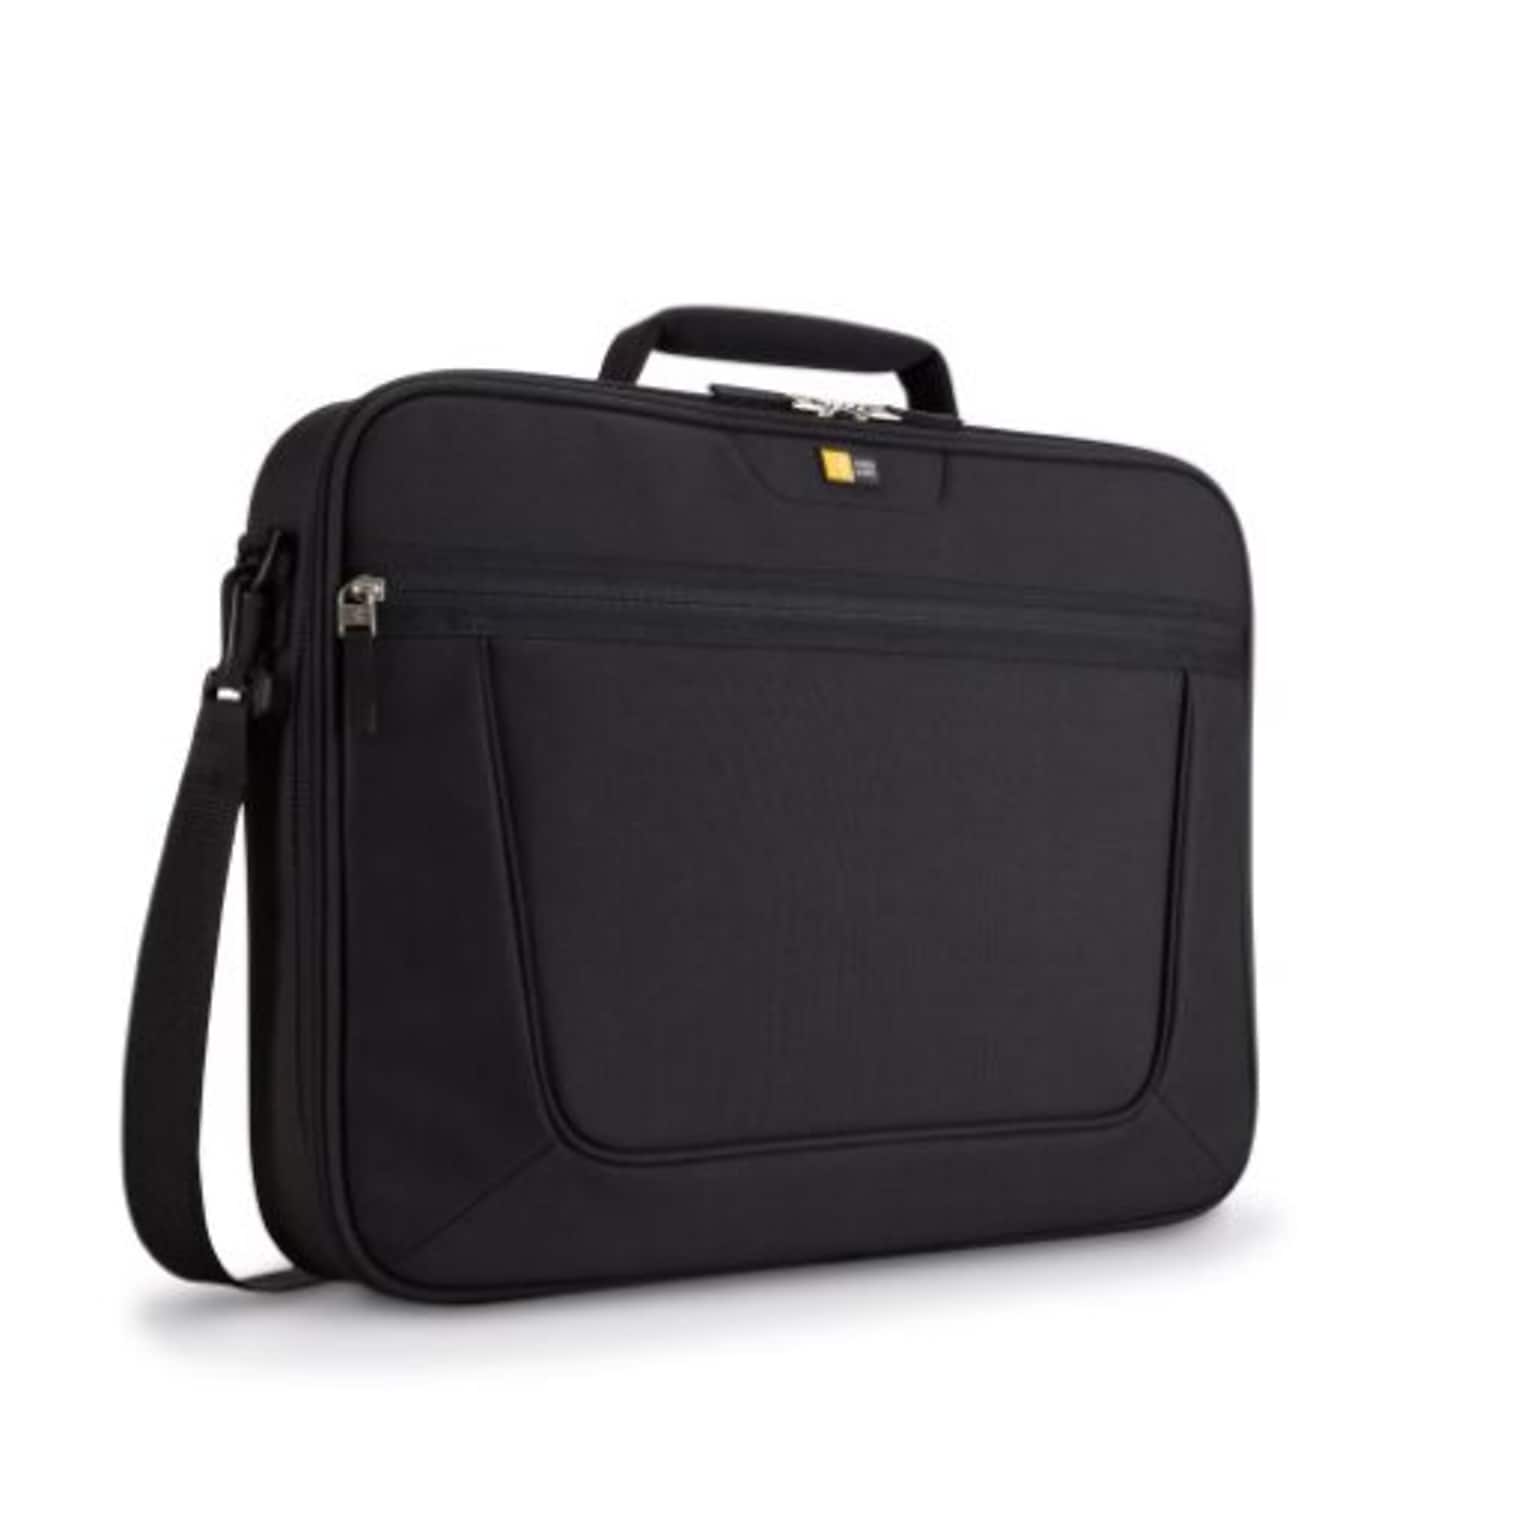 Case Logic 17.3 Polyester Laptop Bag, Black (12651729)